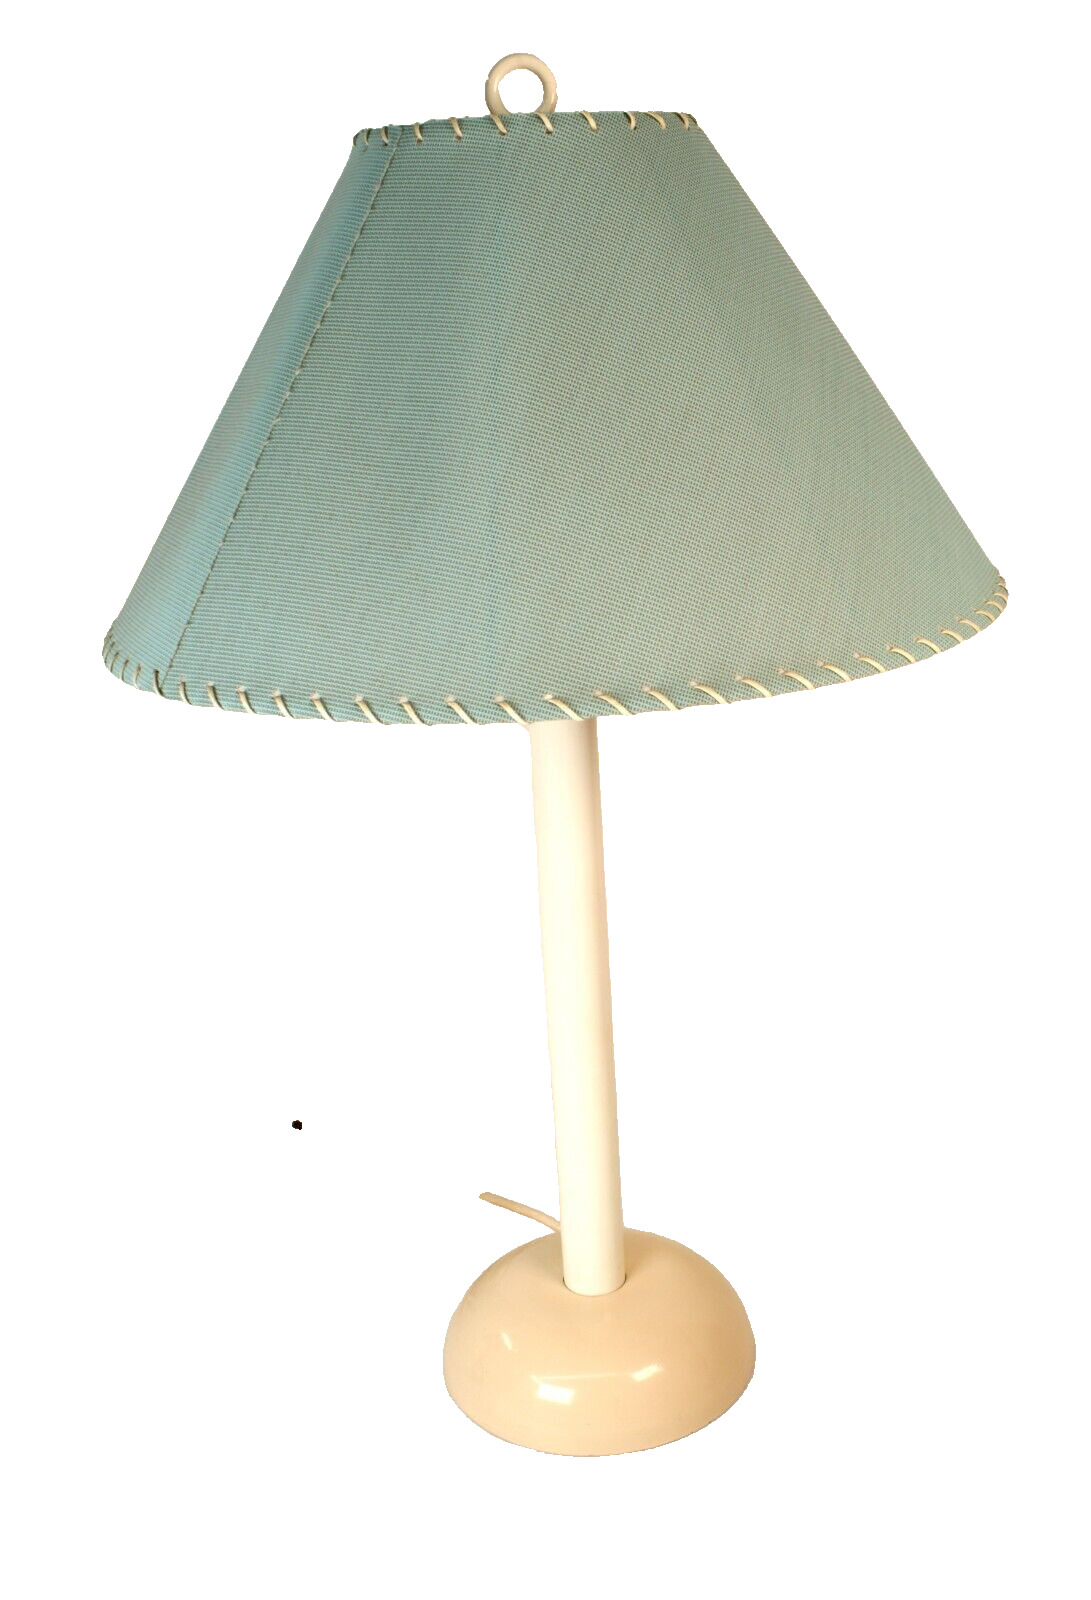 Vintage 1970s Mid-Century Modern Olympia Lighting Outdoor / Indoor Table Lamp